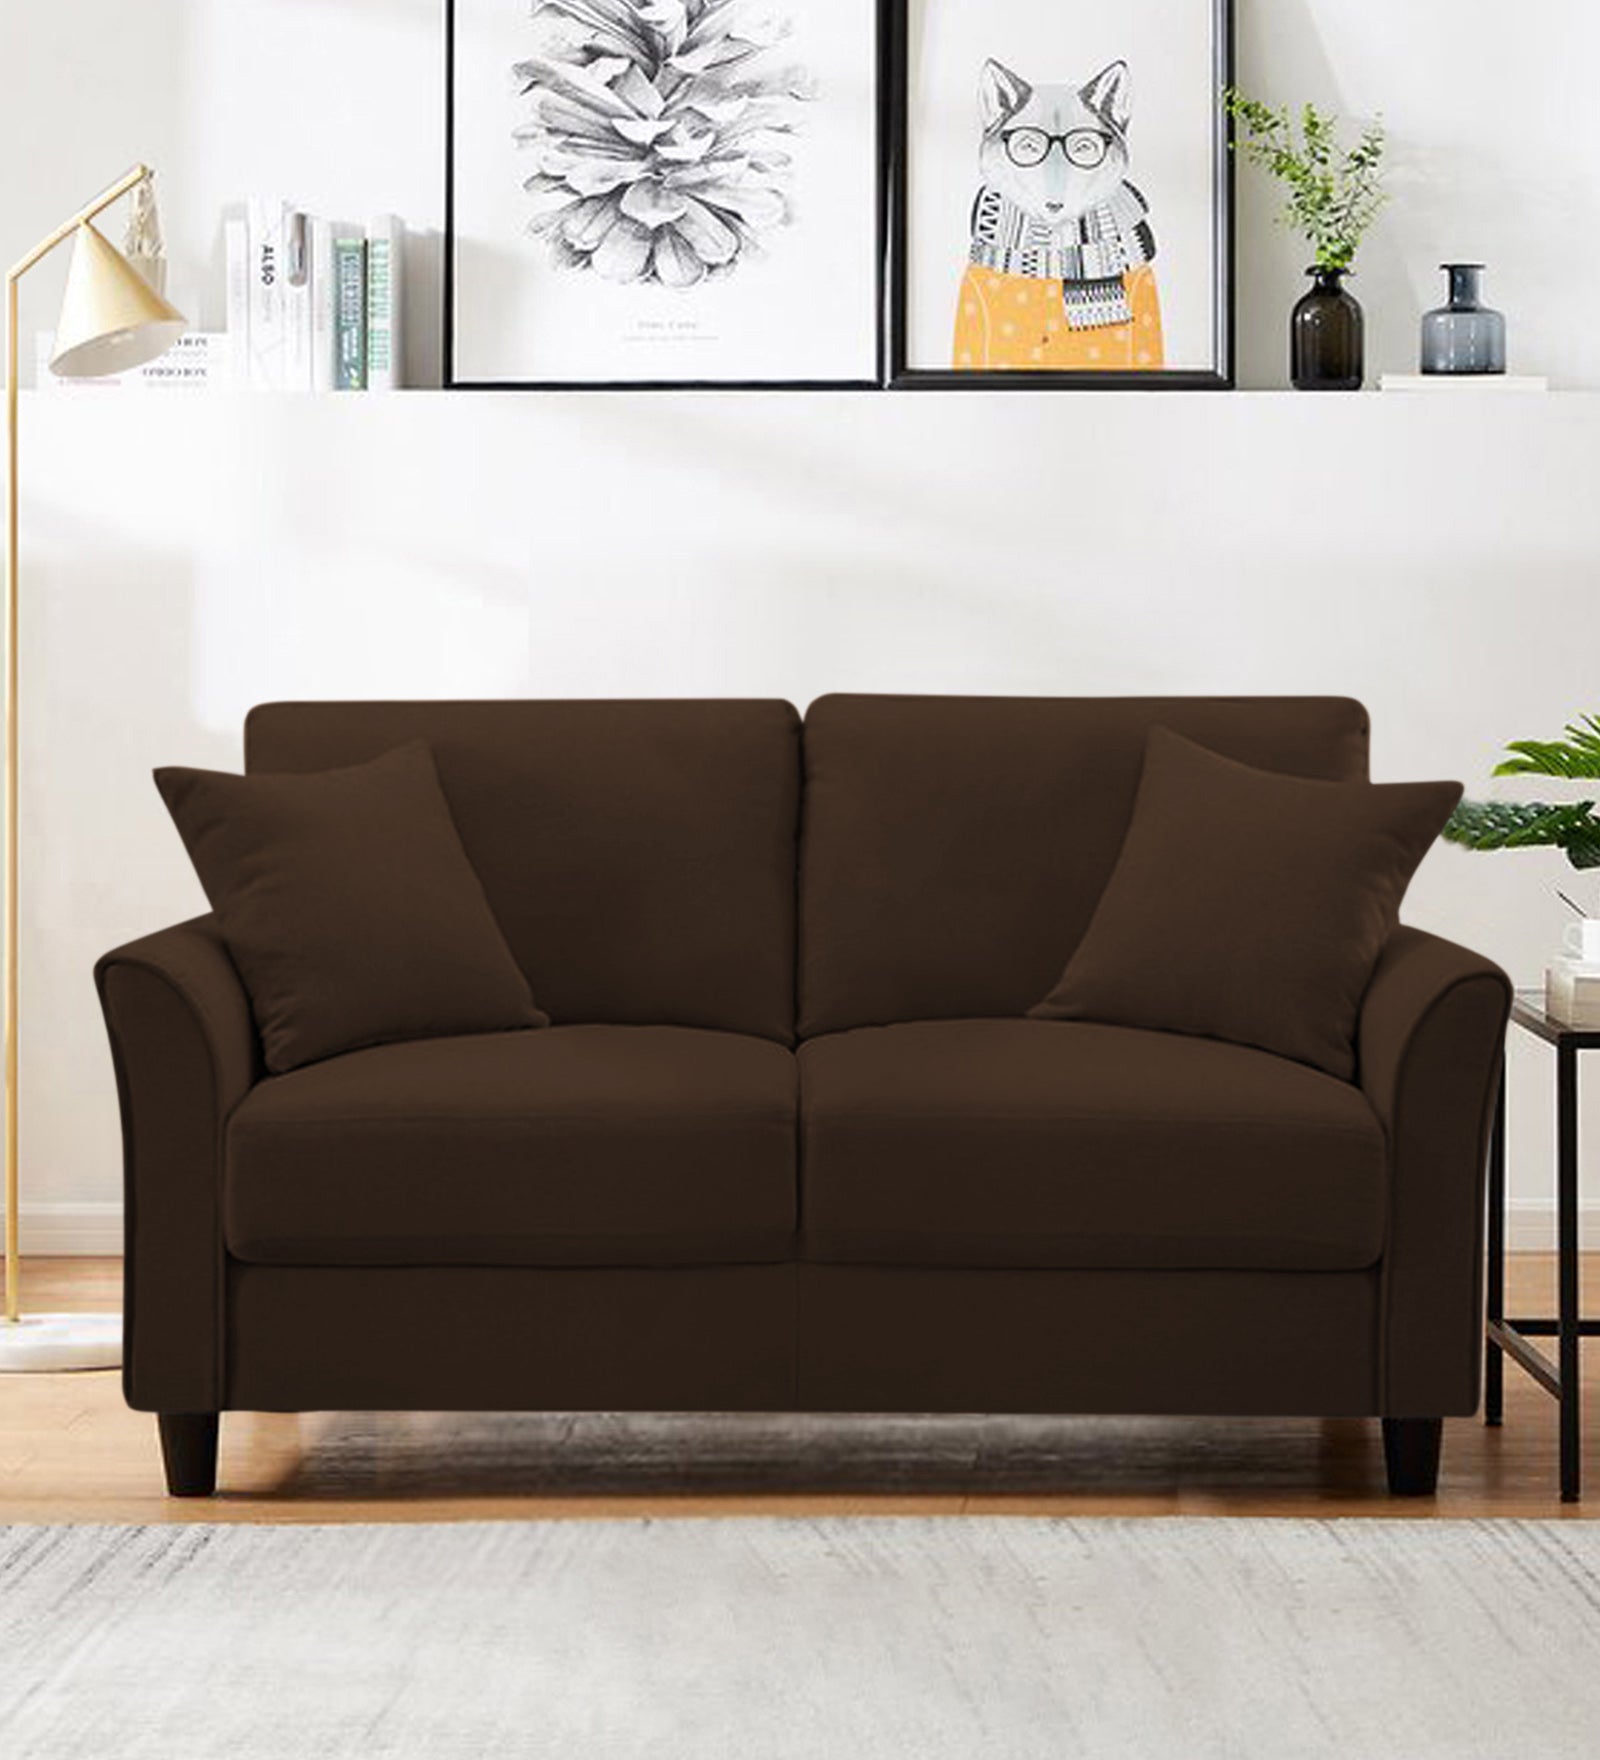 Daroo Velvet 2 Seater Sofa In Chocolate Brown Colour